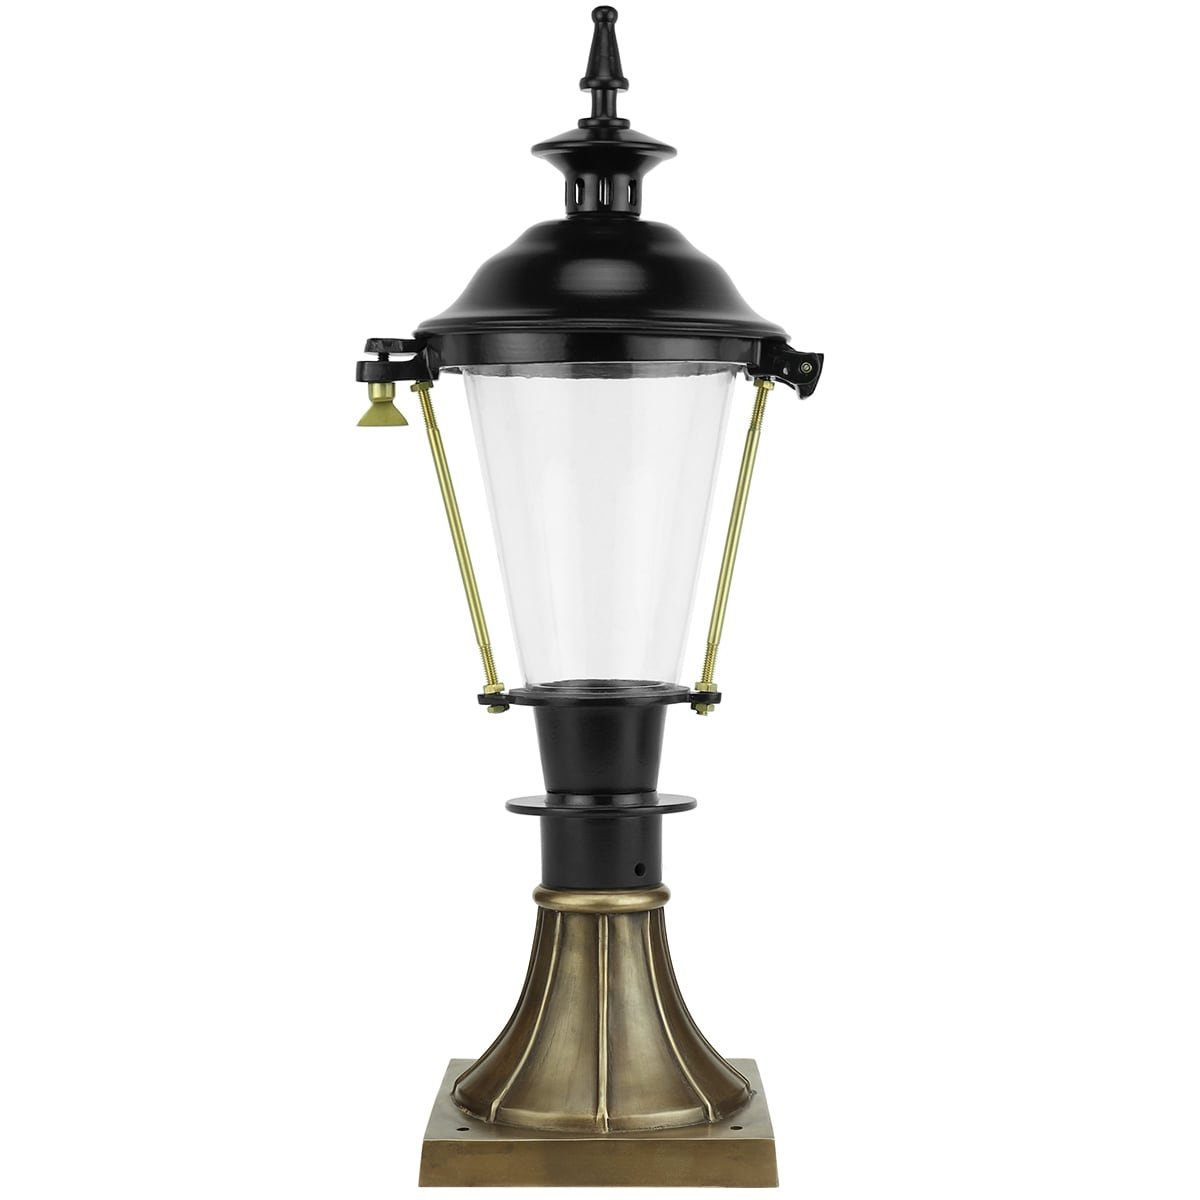 Lanterne au sol Rockanje bronze - 56 cm